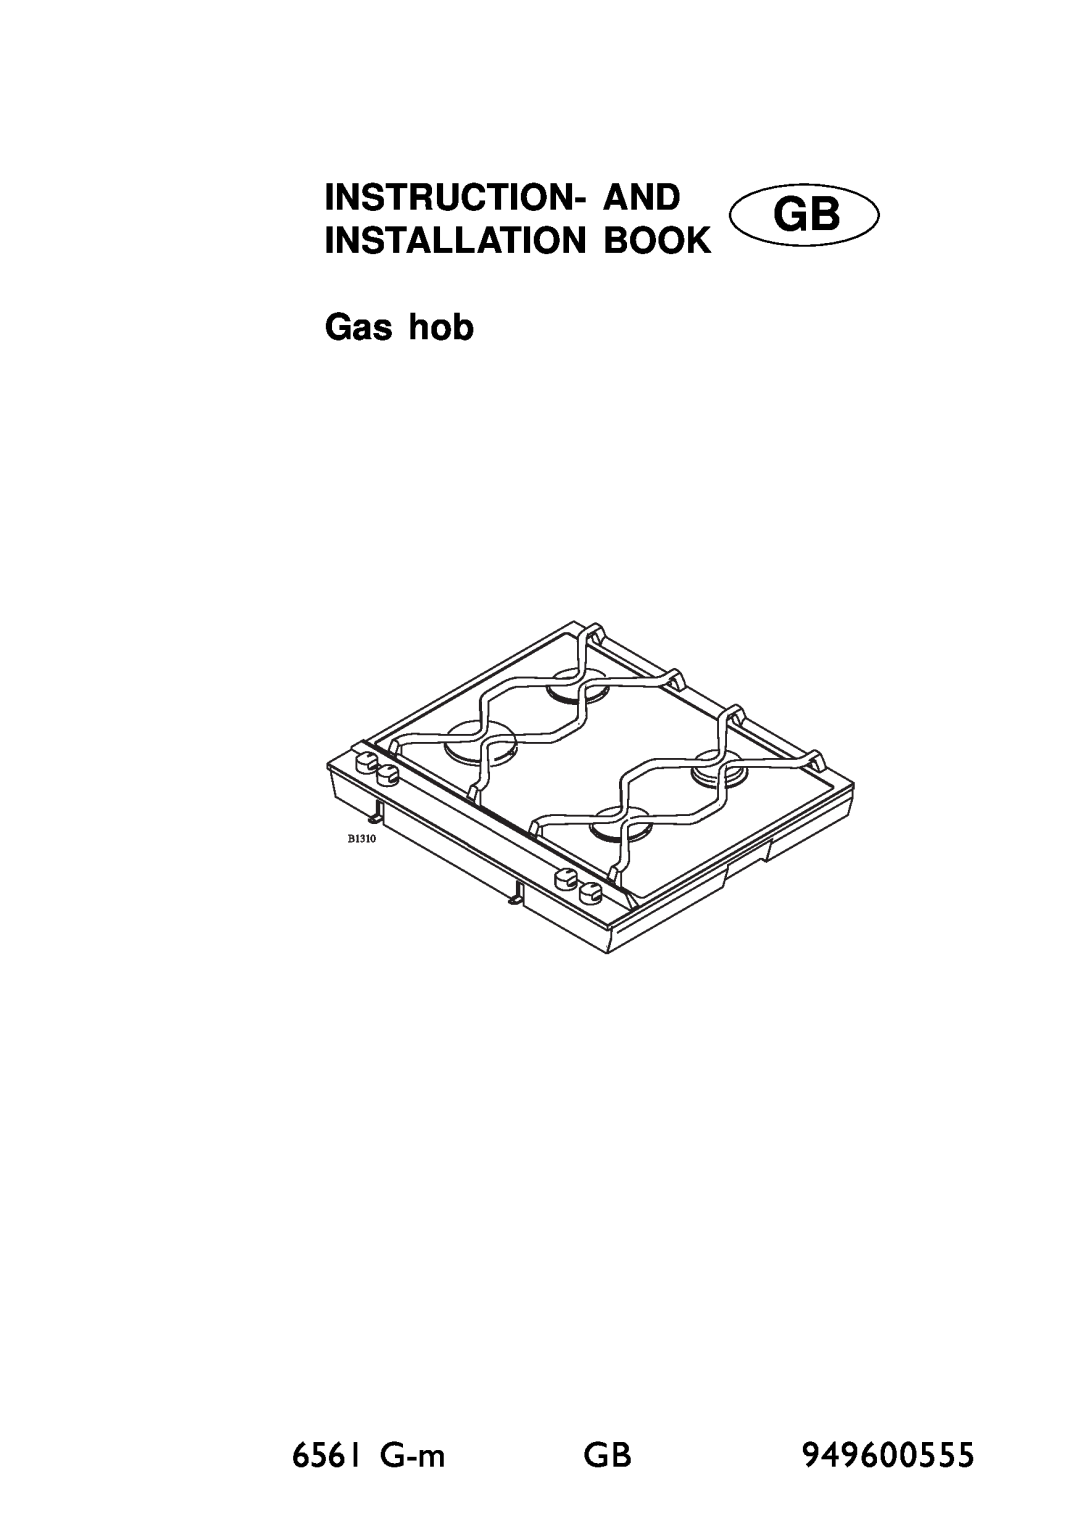 Electrolux 6561 G-m GB manual 1 GB, INSTRUCTION- AND GB INSTALLATION BOOK Gas hob, 949600555 